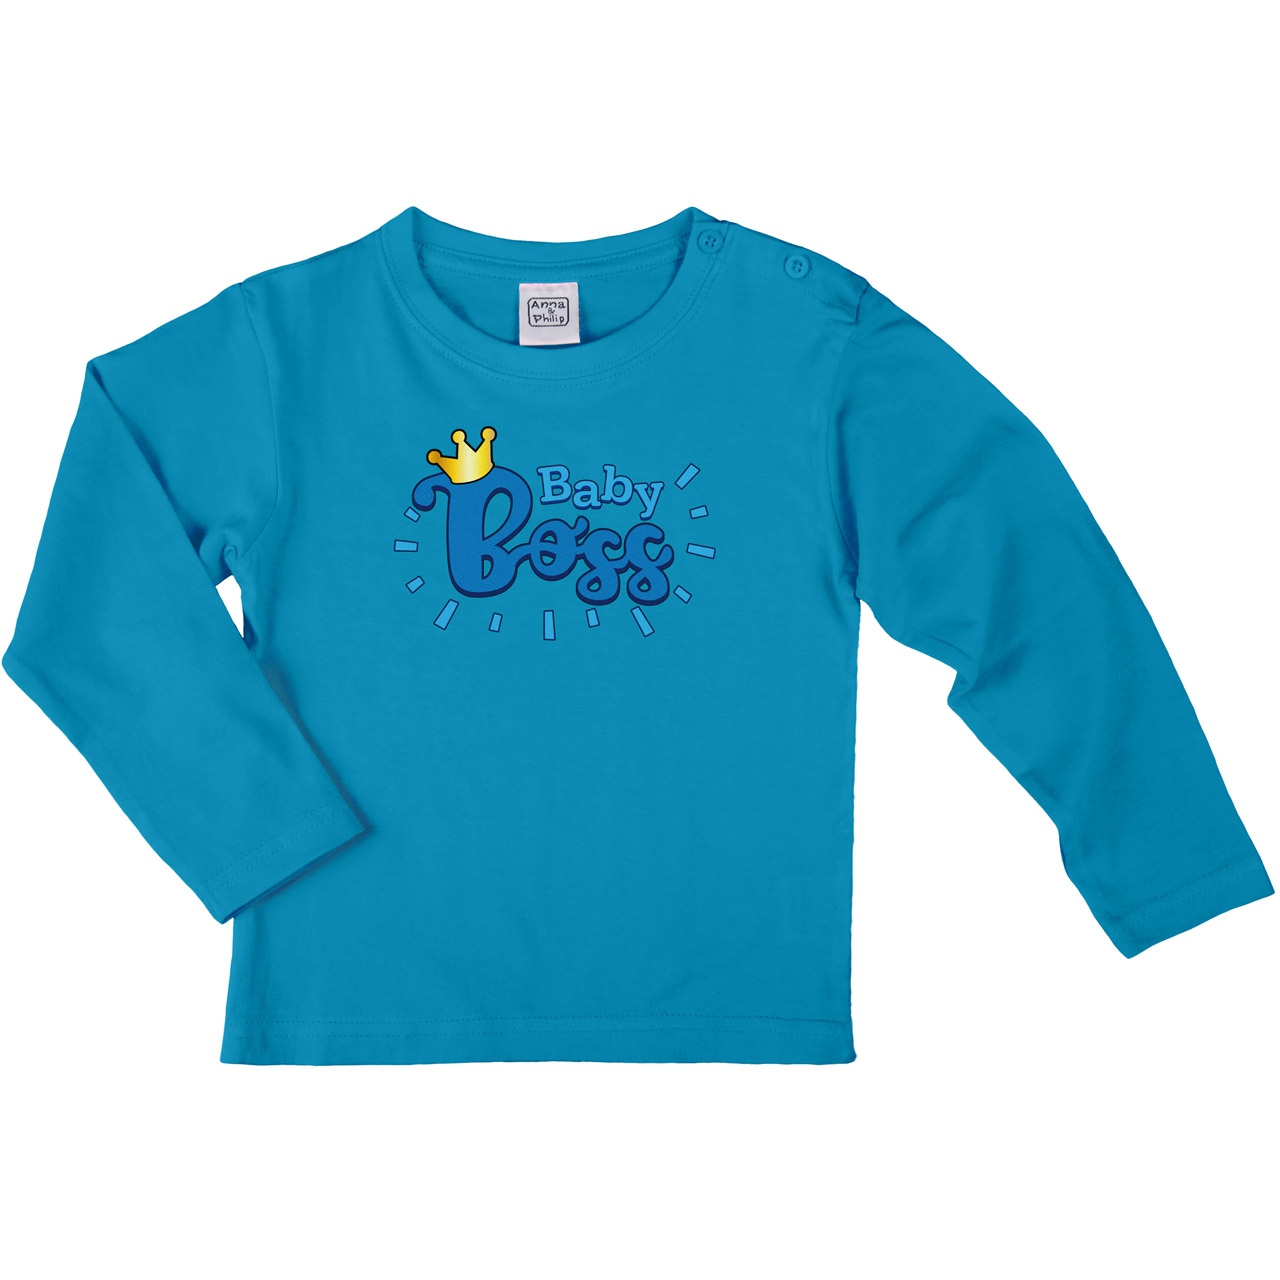 Baby Boss Blau Kinder Langarm Shirt türkis 68 / 74